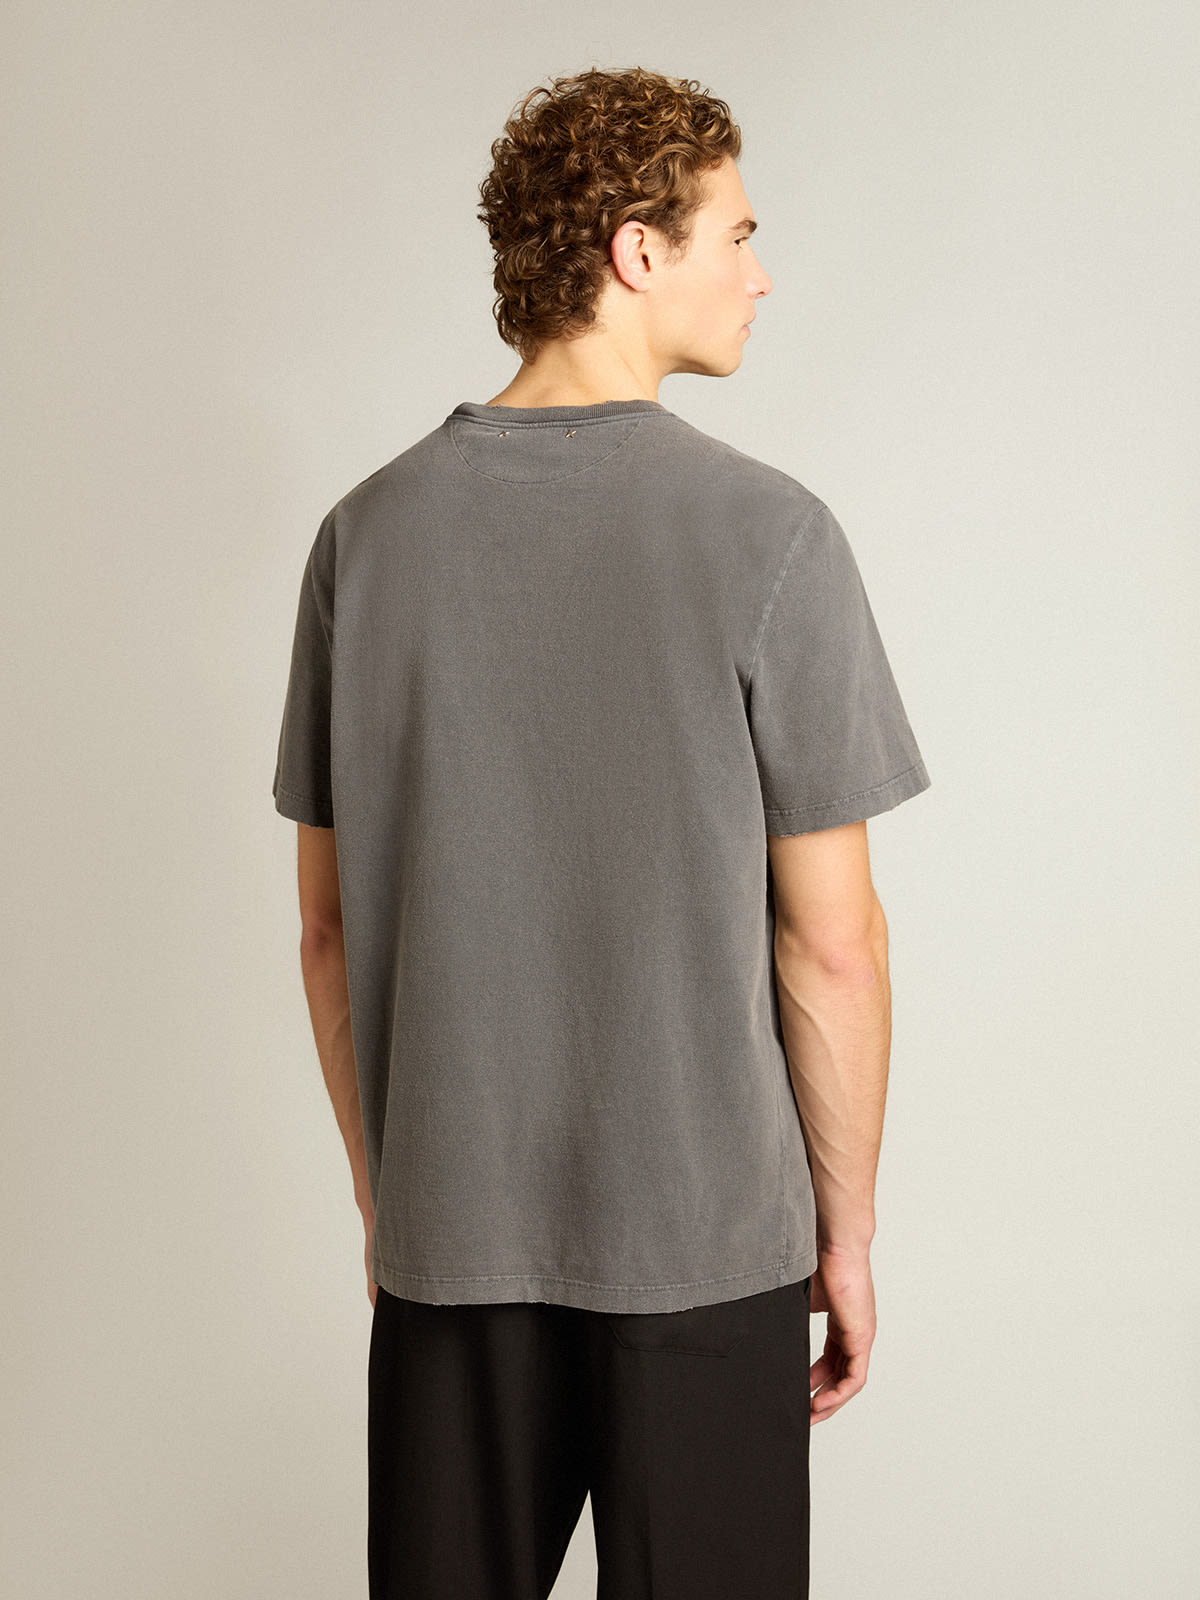 Golden Goose - Camiseta masculina cinza antracite com tratamento desgastado in 